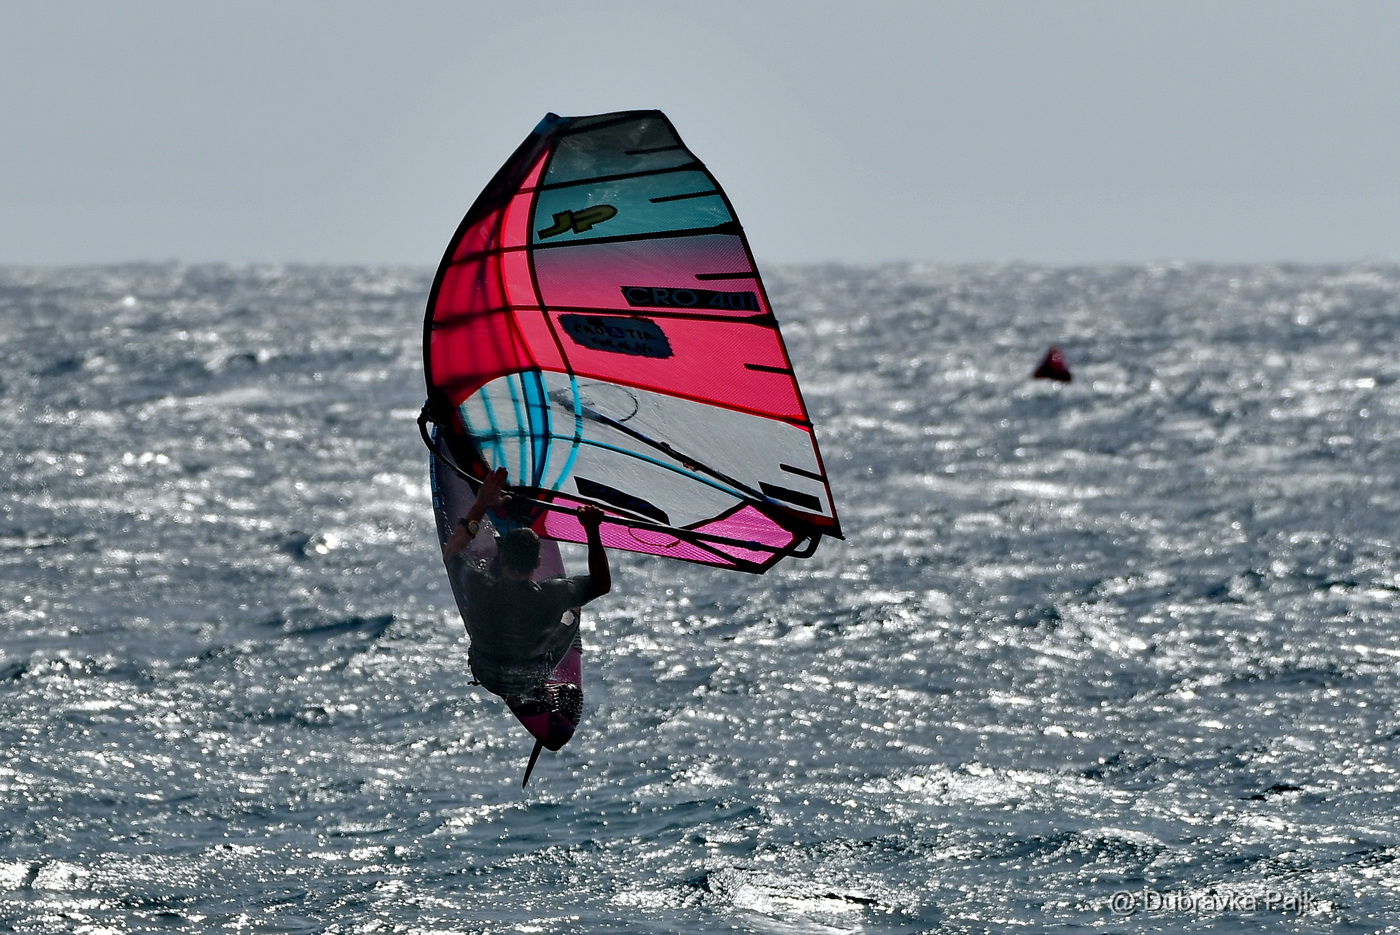 Never tired of windsurfing